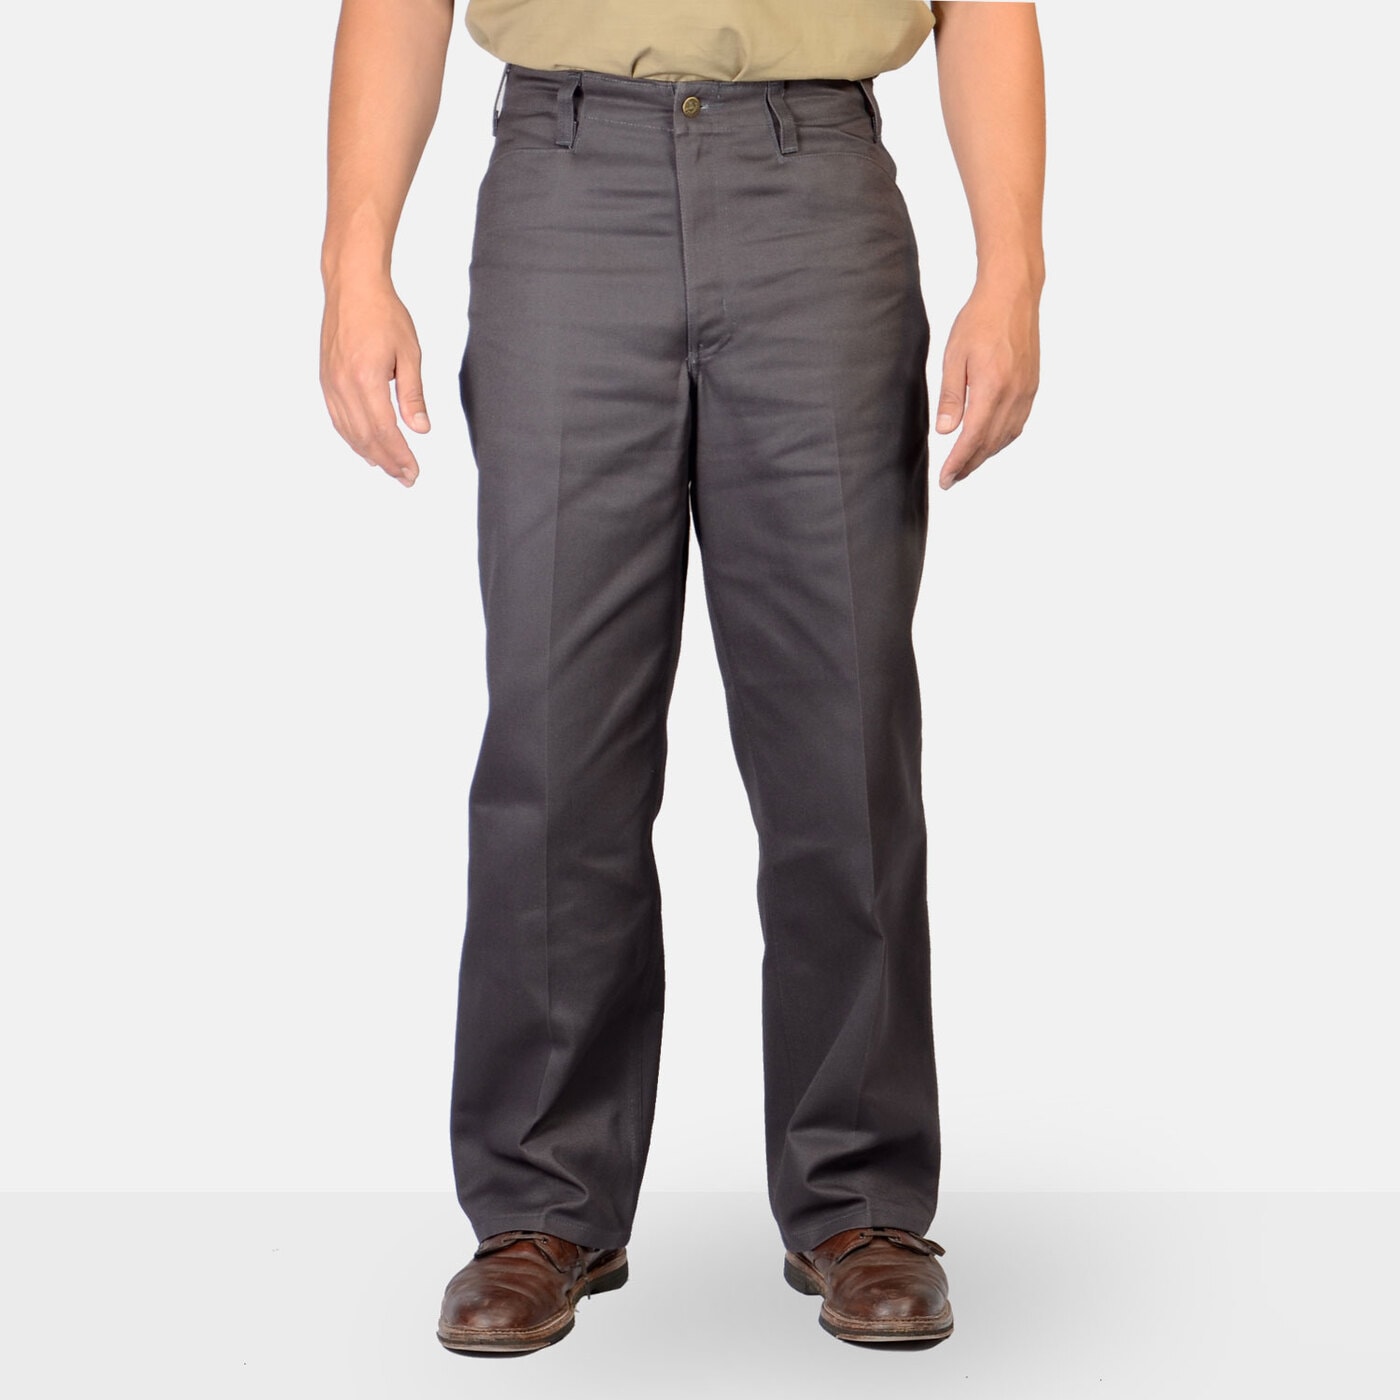 Ben Davis Men's Original Pants_Charcoal - Work World - Workwear, Work Boots, Safety Gear